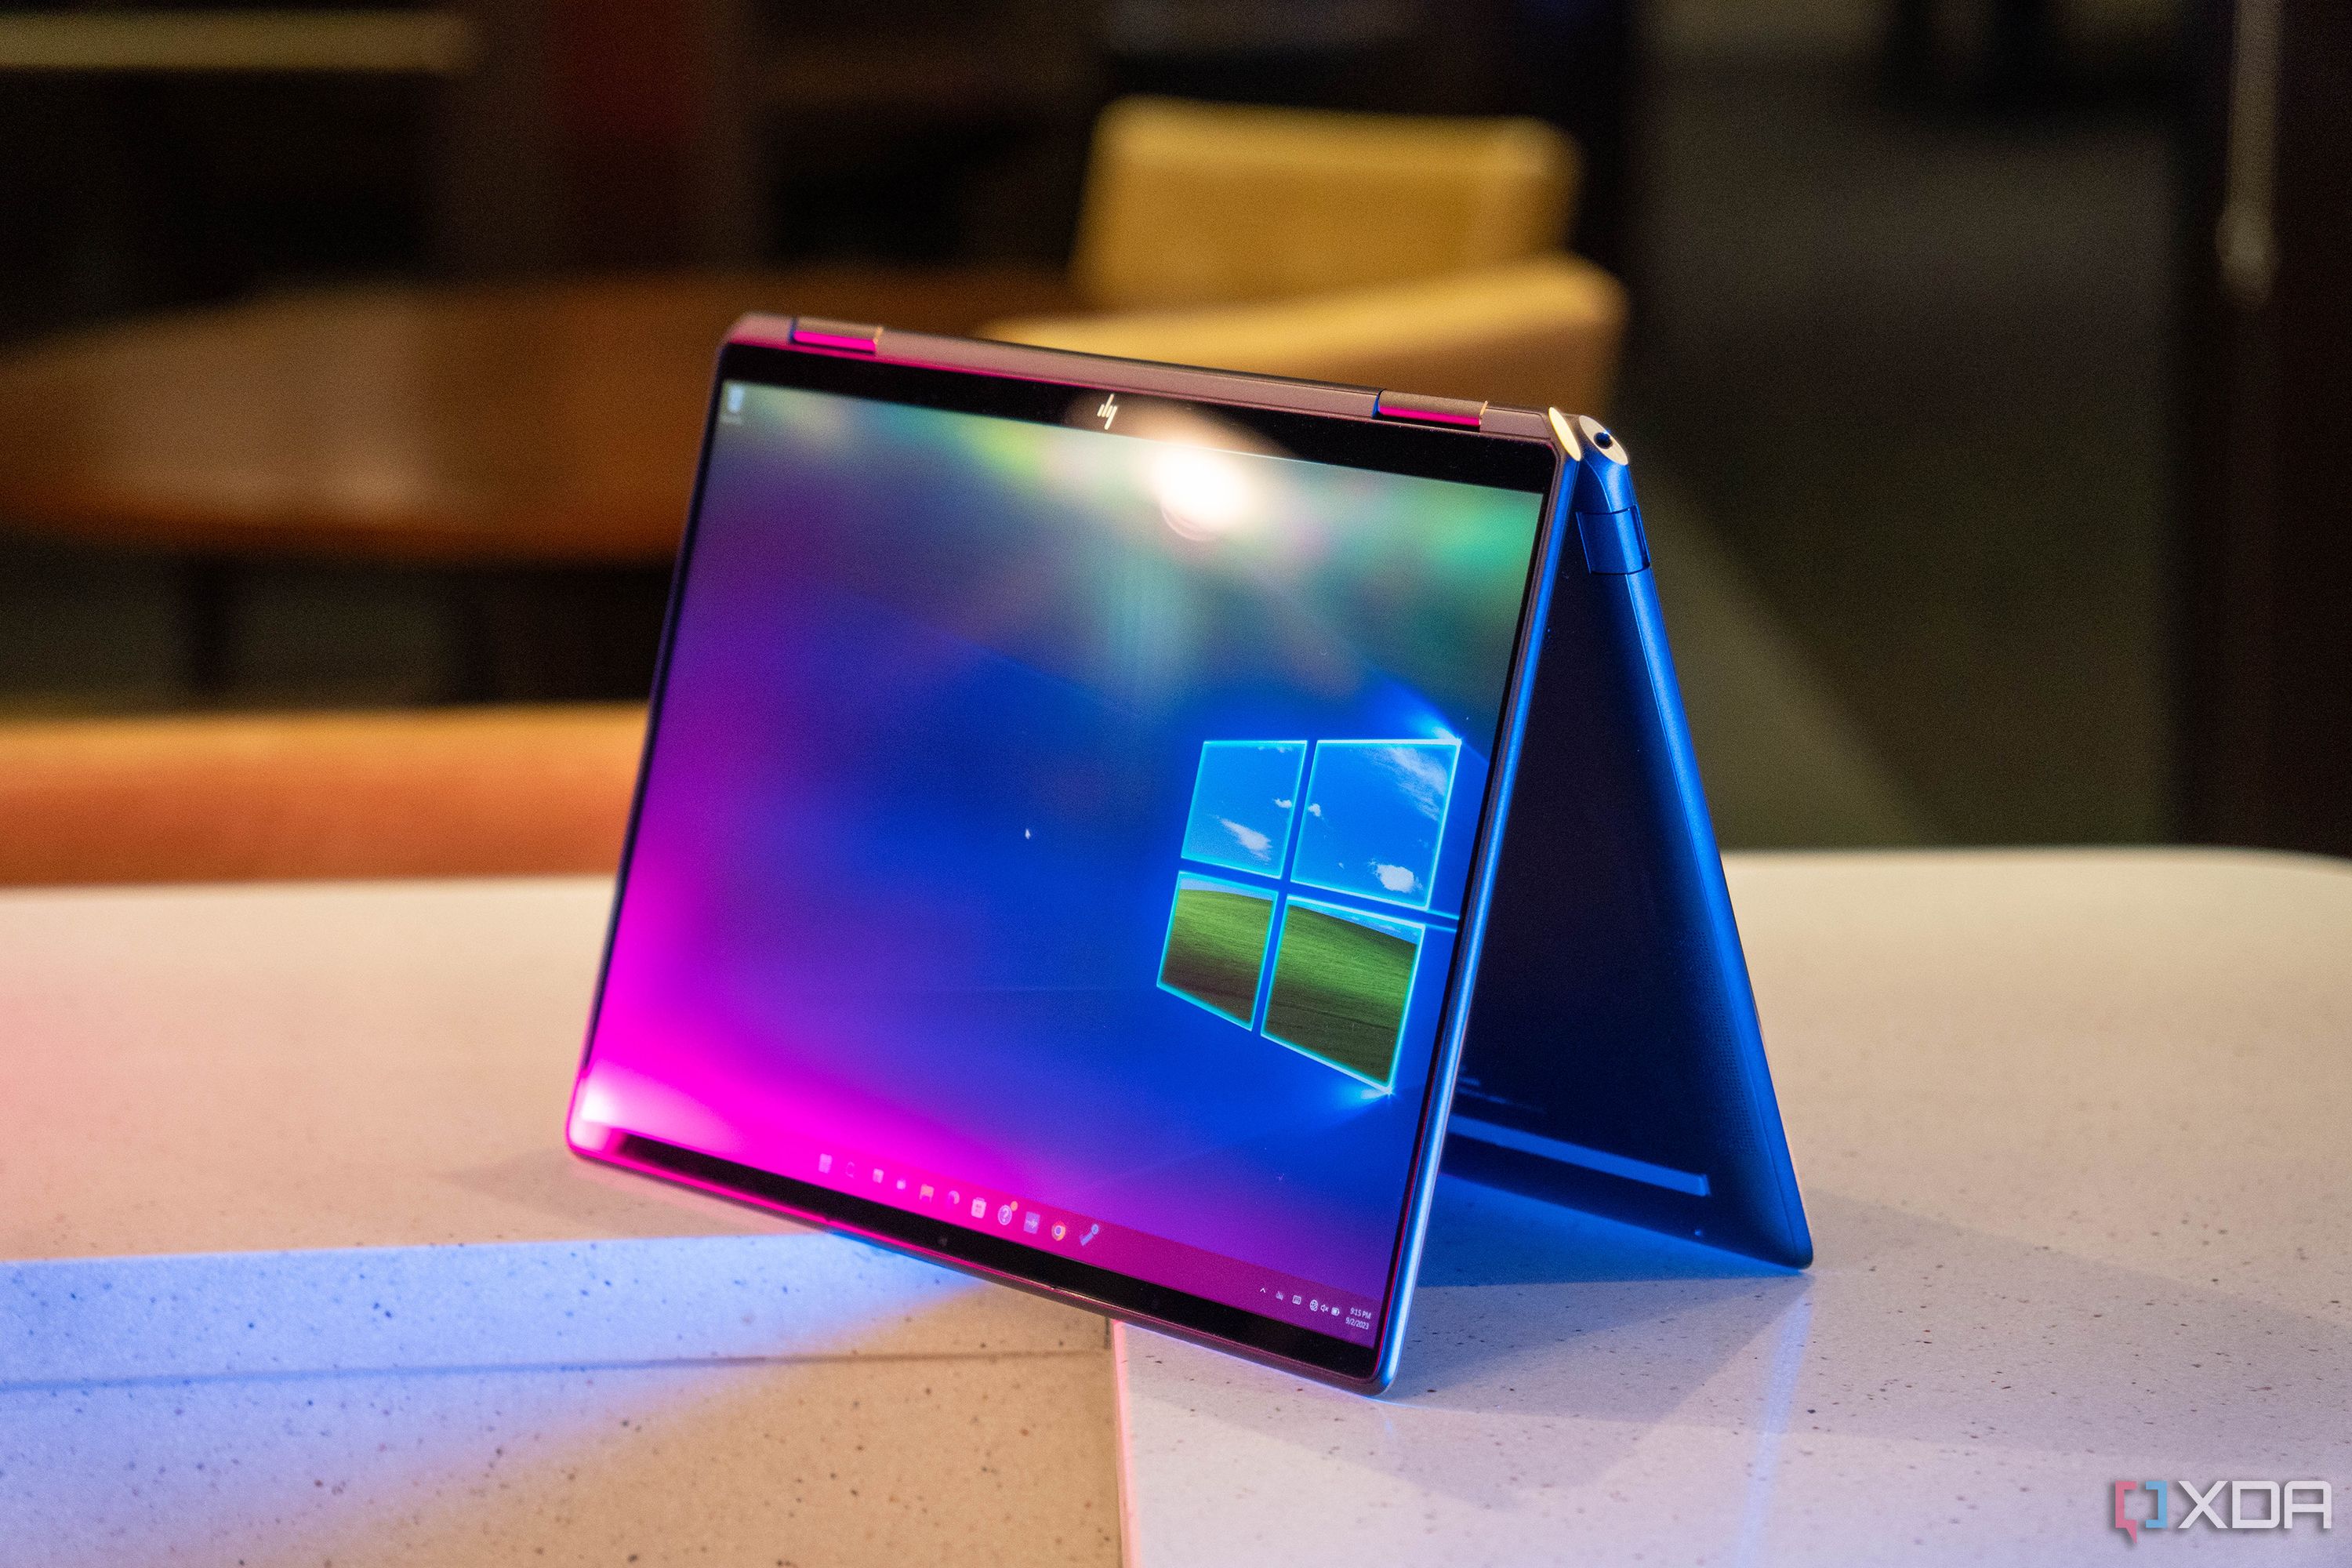 HP Spectre x360 14: The New Best 2-in-1 Laptop